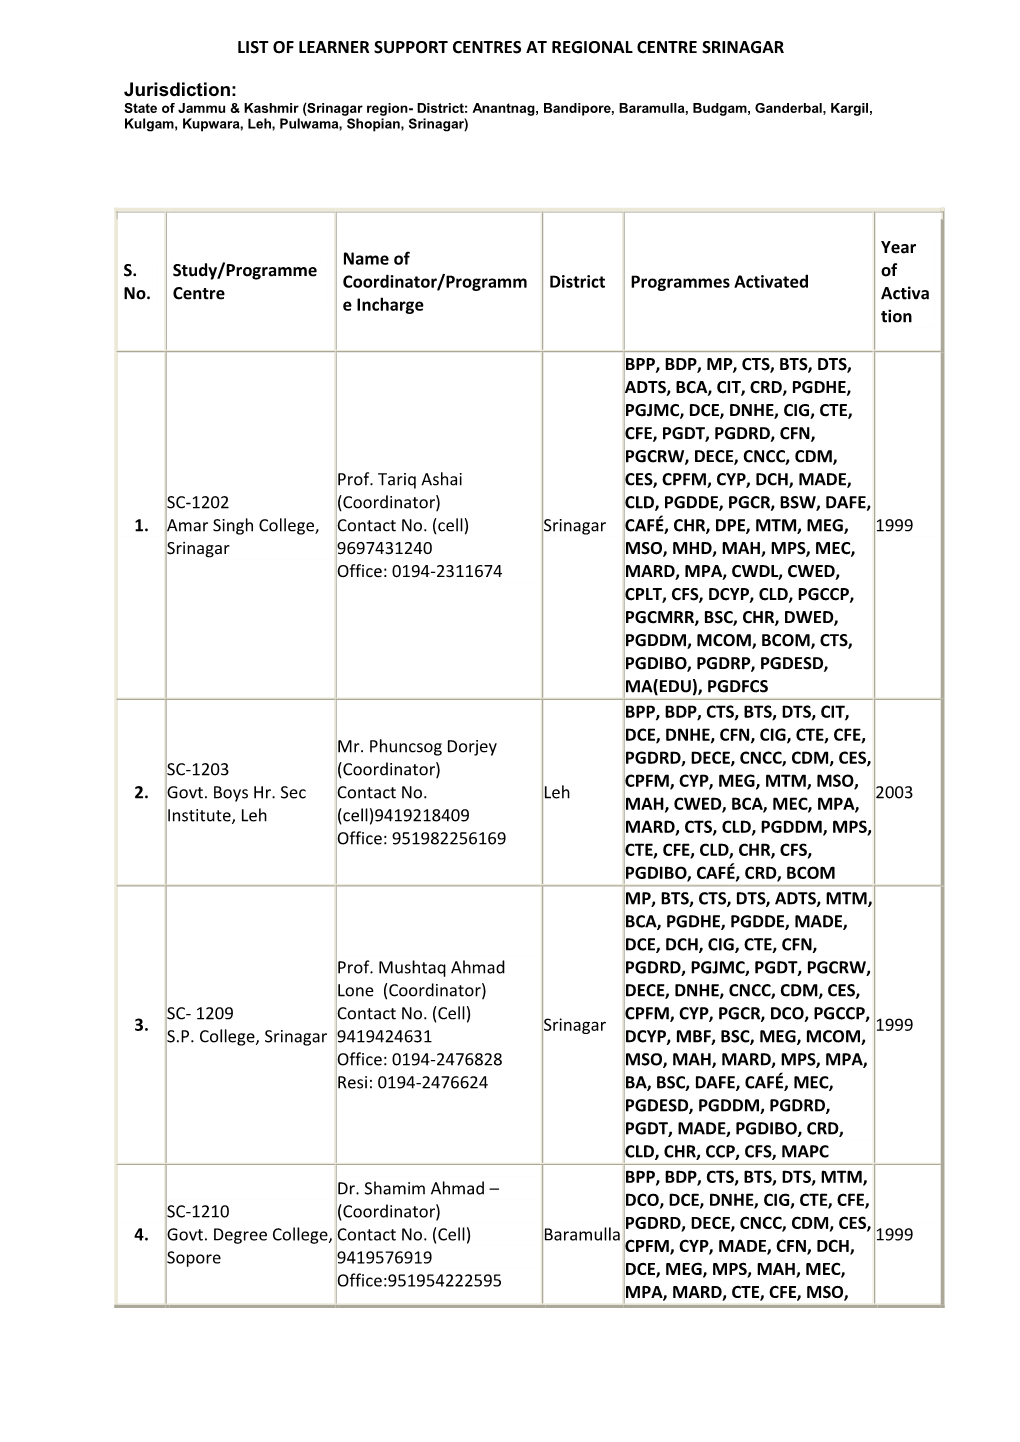 List of Learner Support Centres at Regional Centre Srinagar